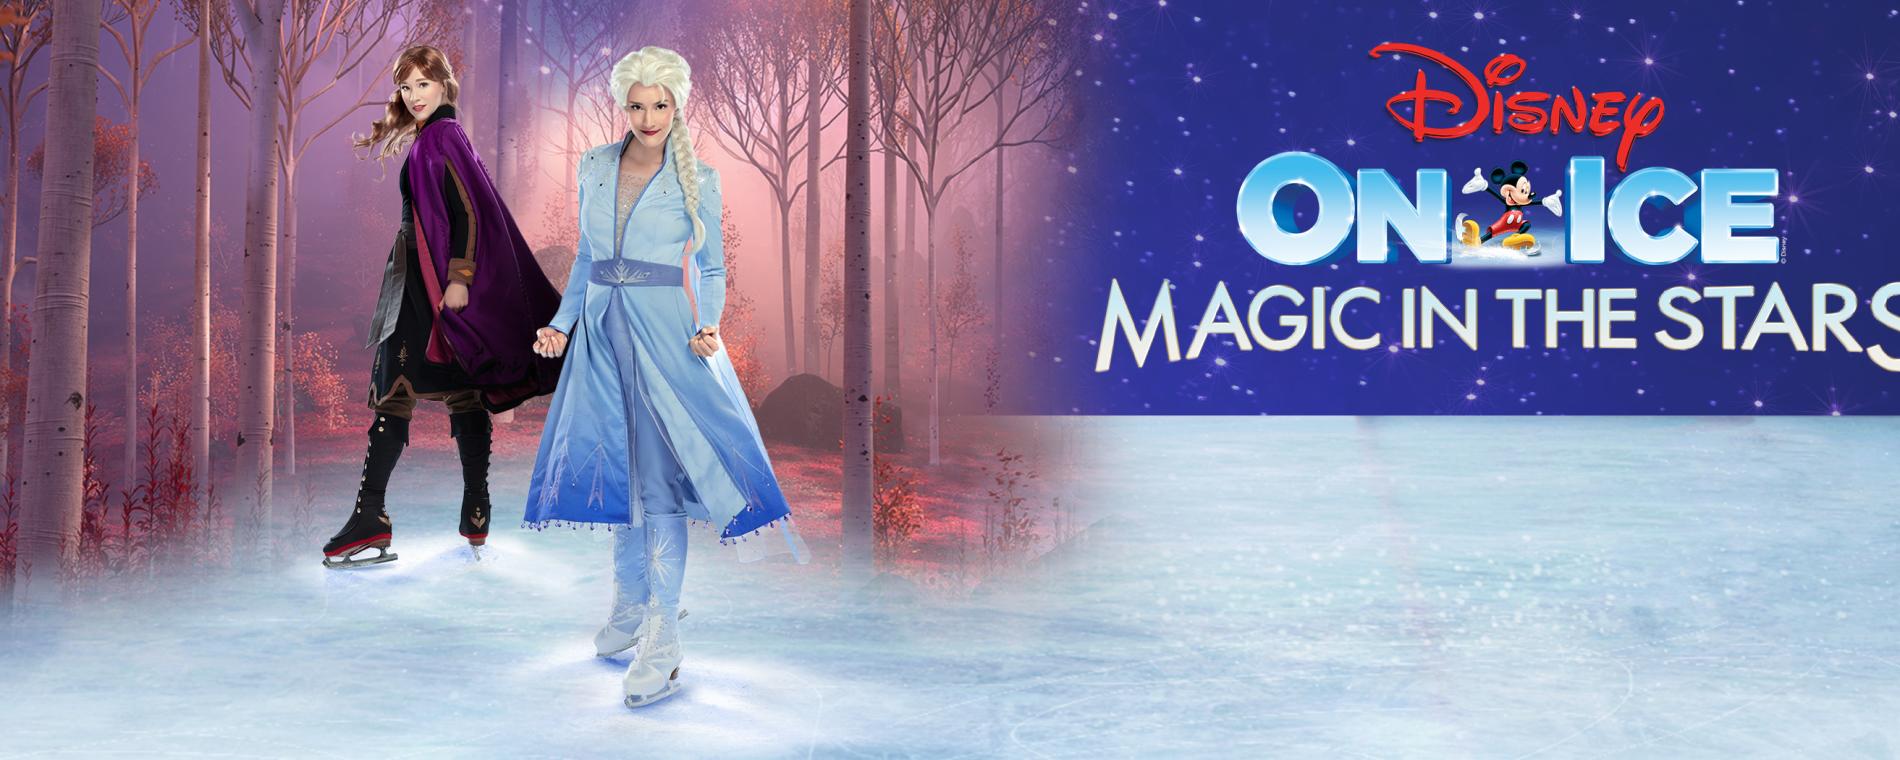 Disney on Ice Presents Magic in the Stars